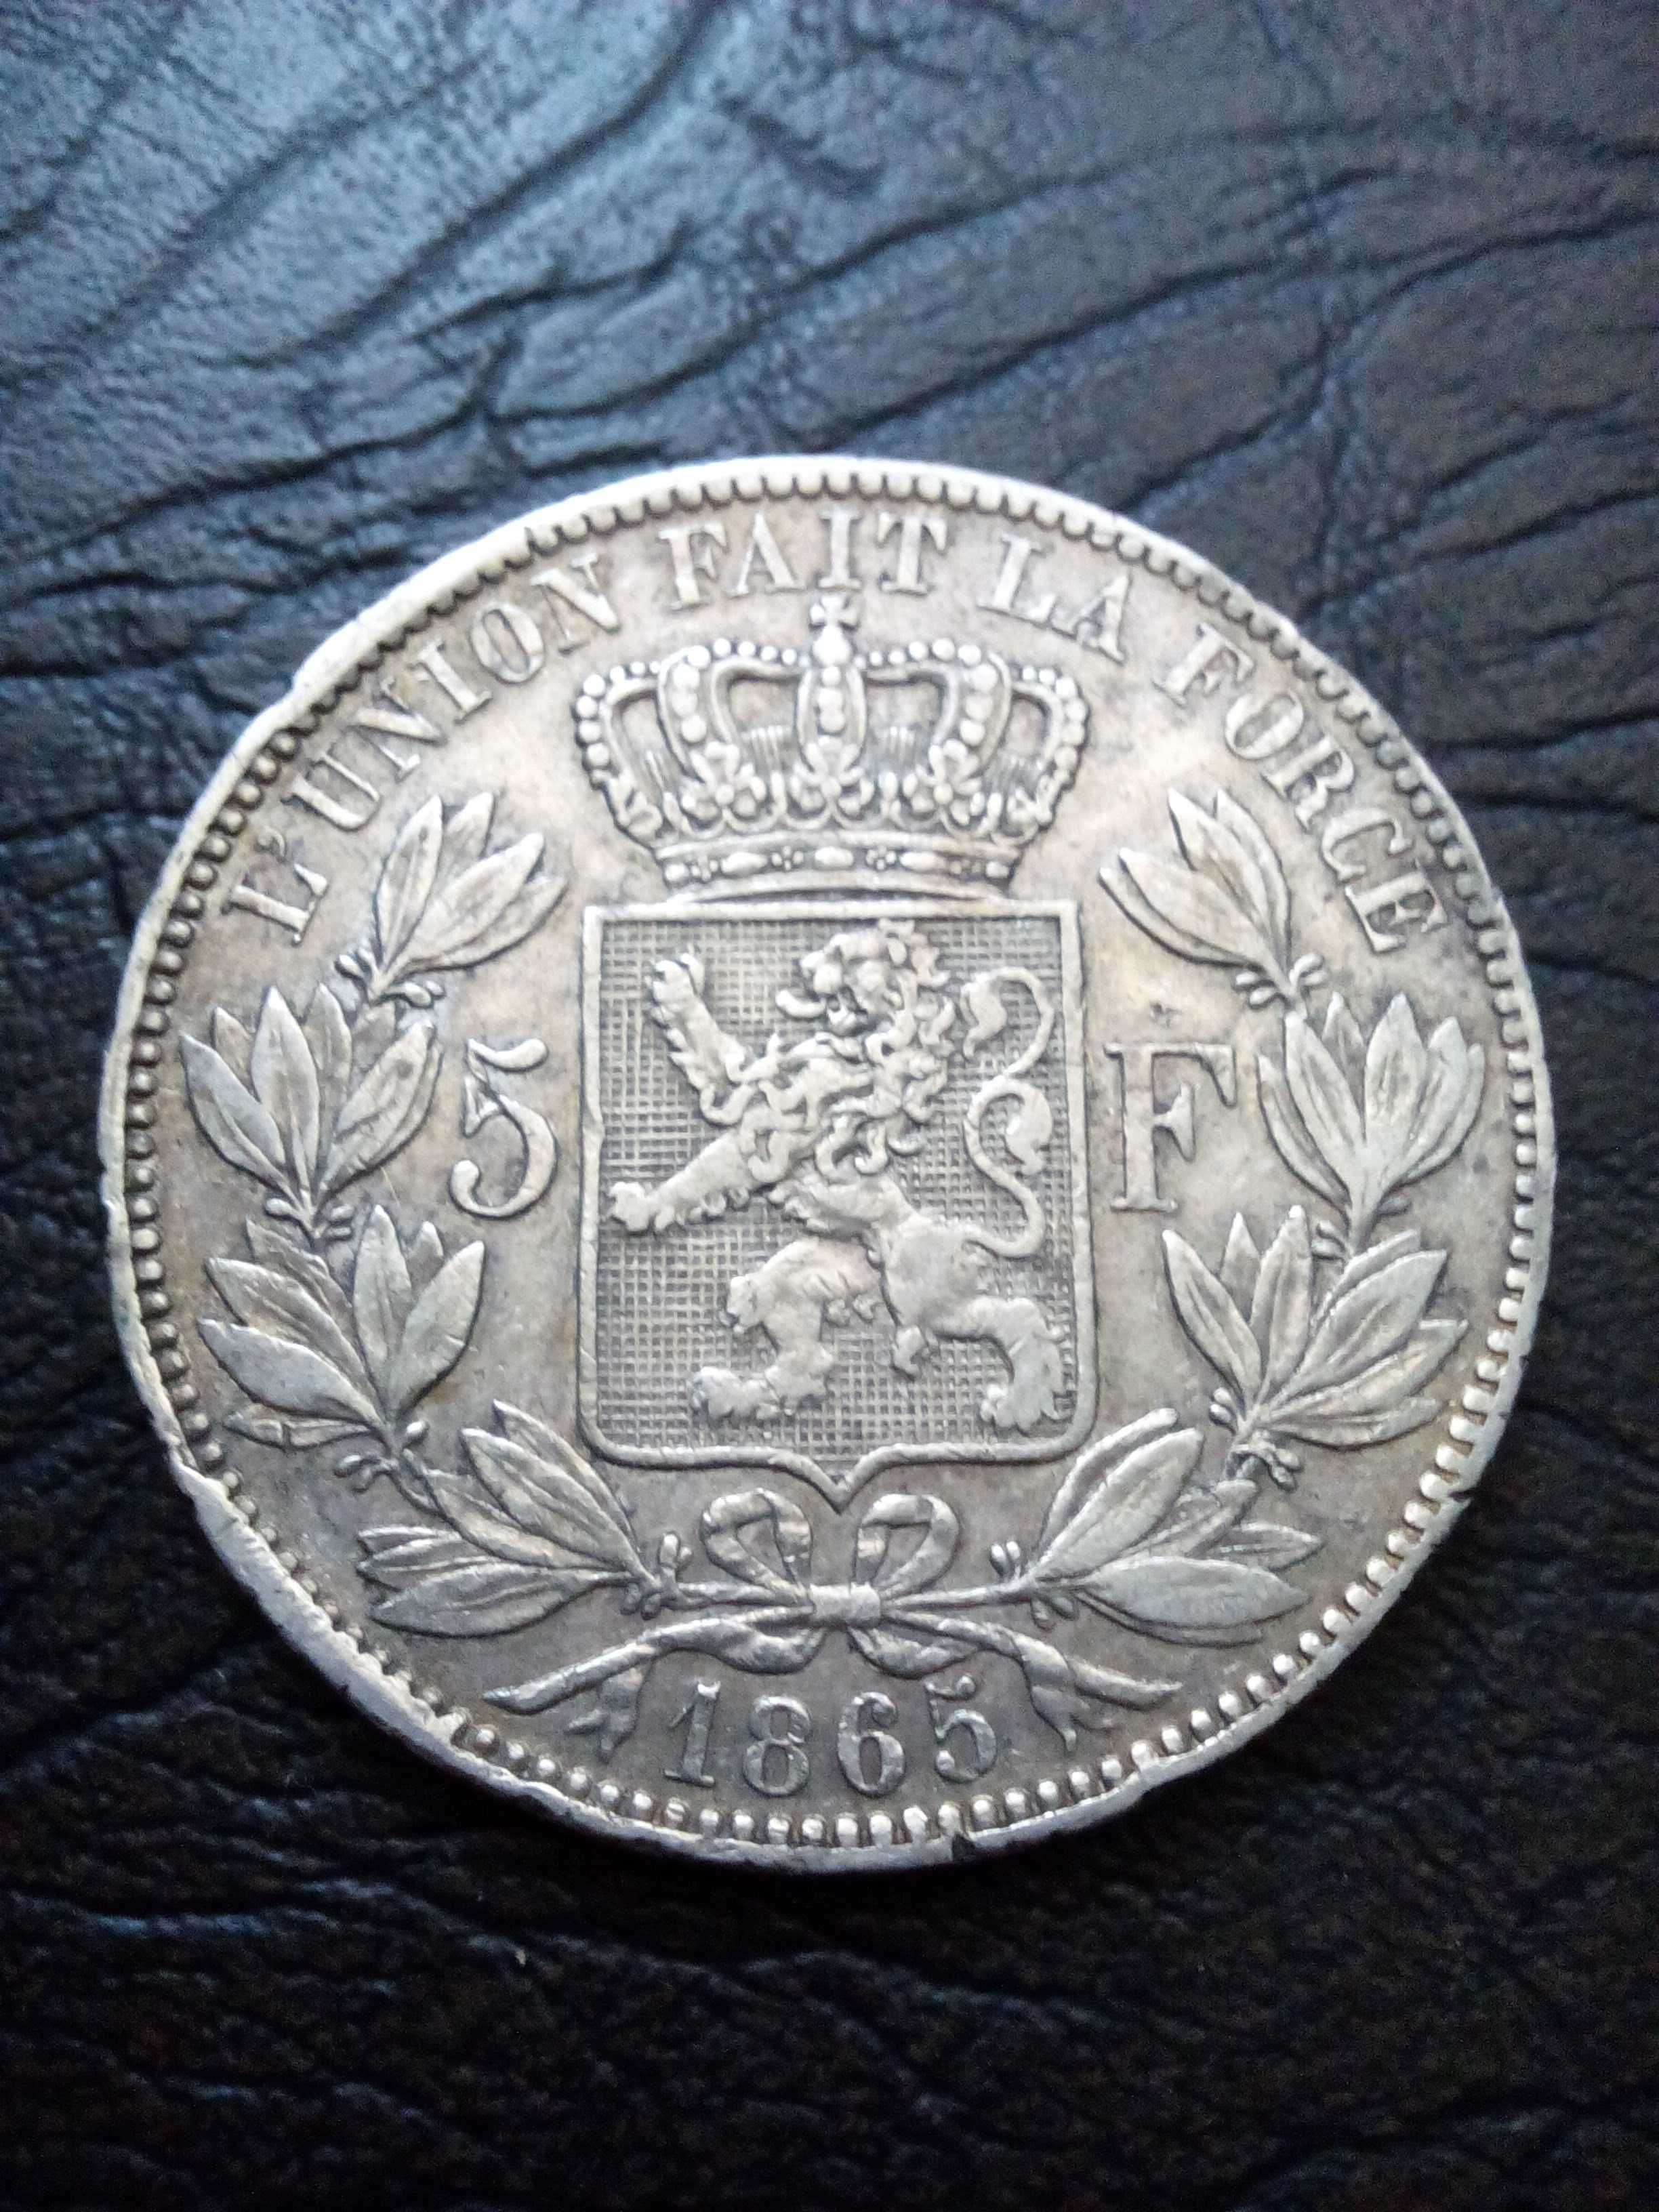 Стари сребърни монети